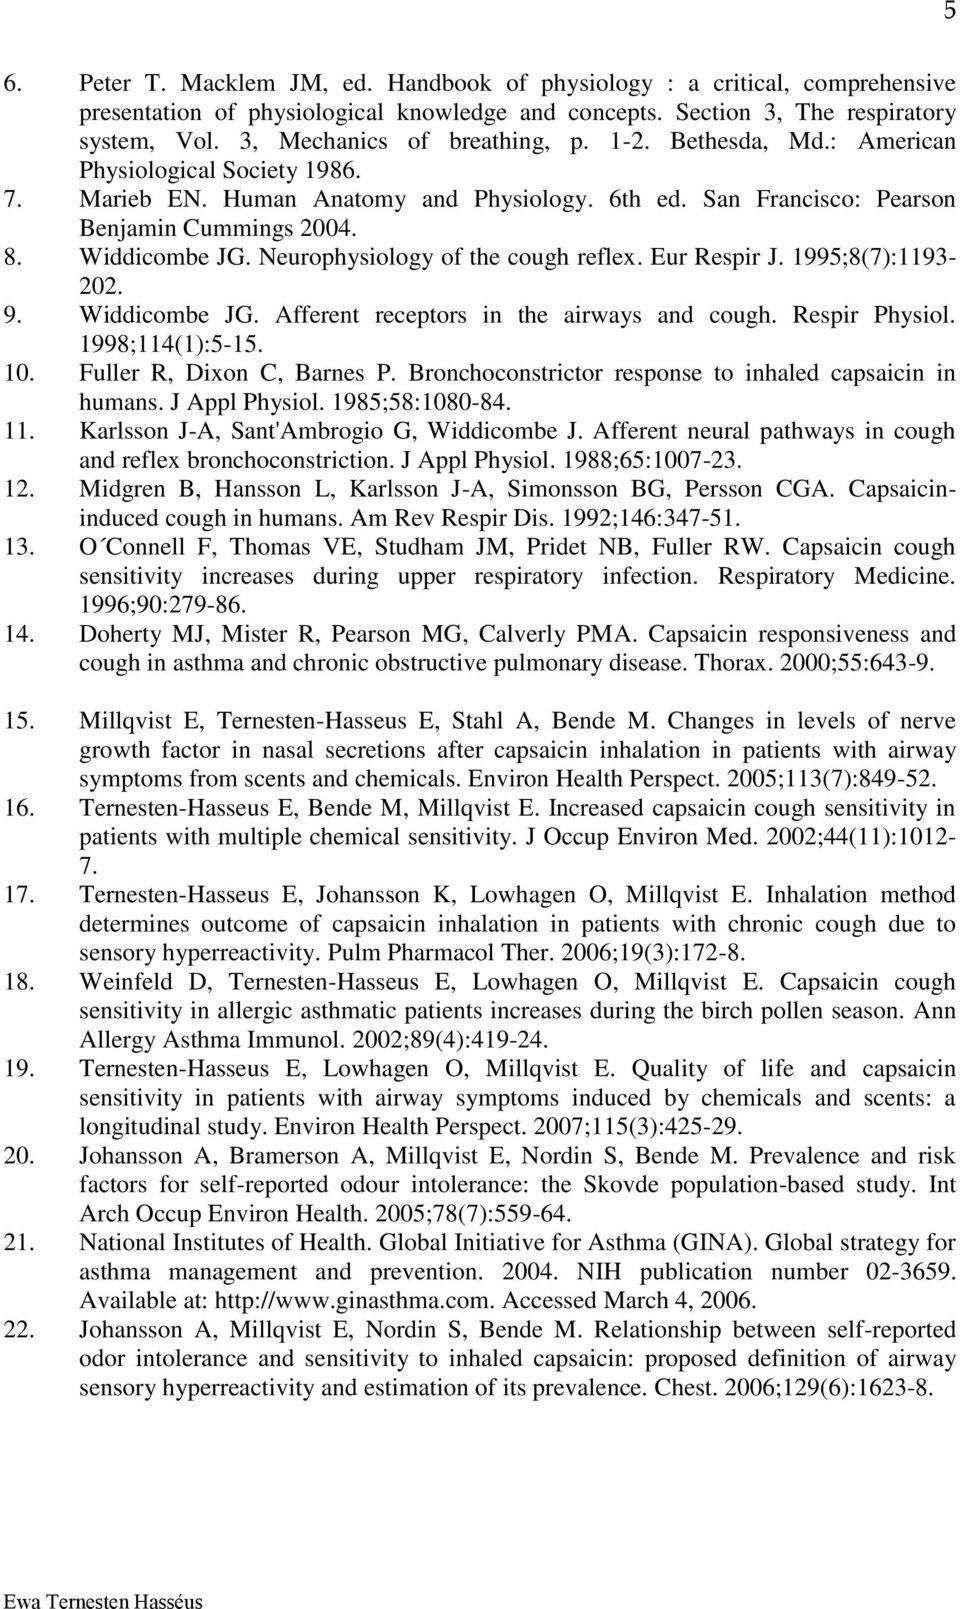 Widdicombe JG. Neurophysiology of the cough reflex. Eur Respir J. 1995;8(7):1193-202. 9. Widdicombe JG. Afferent receptors in the airways and cough. Respir Physiol. 1998;114(1):5-15. 10.